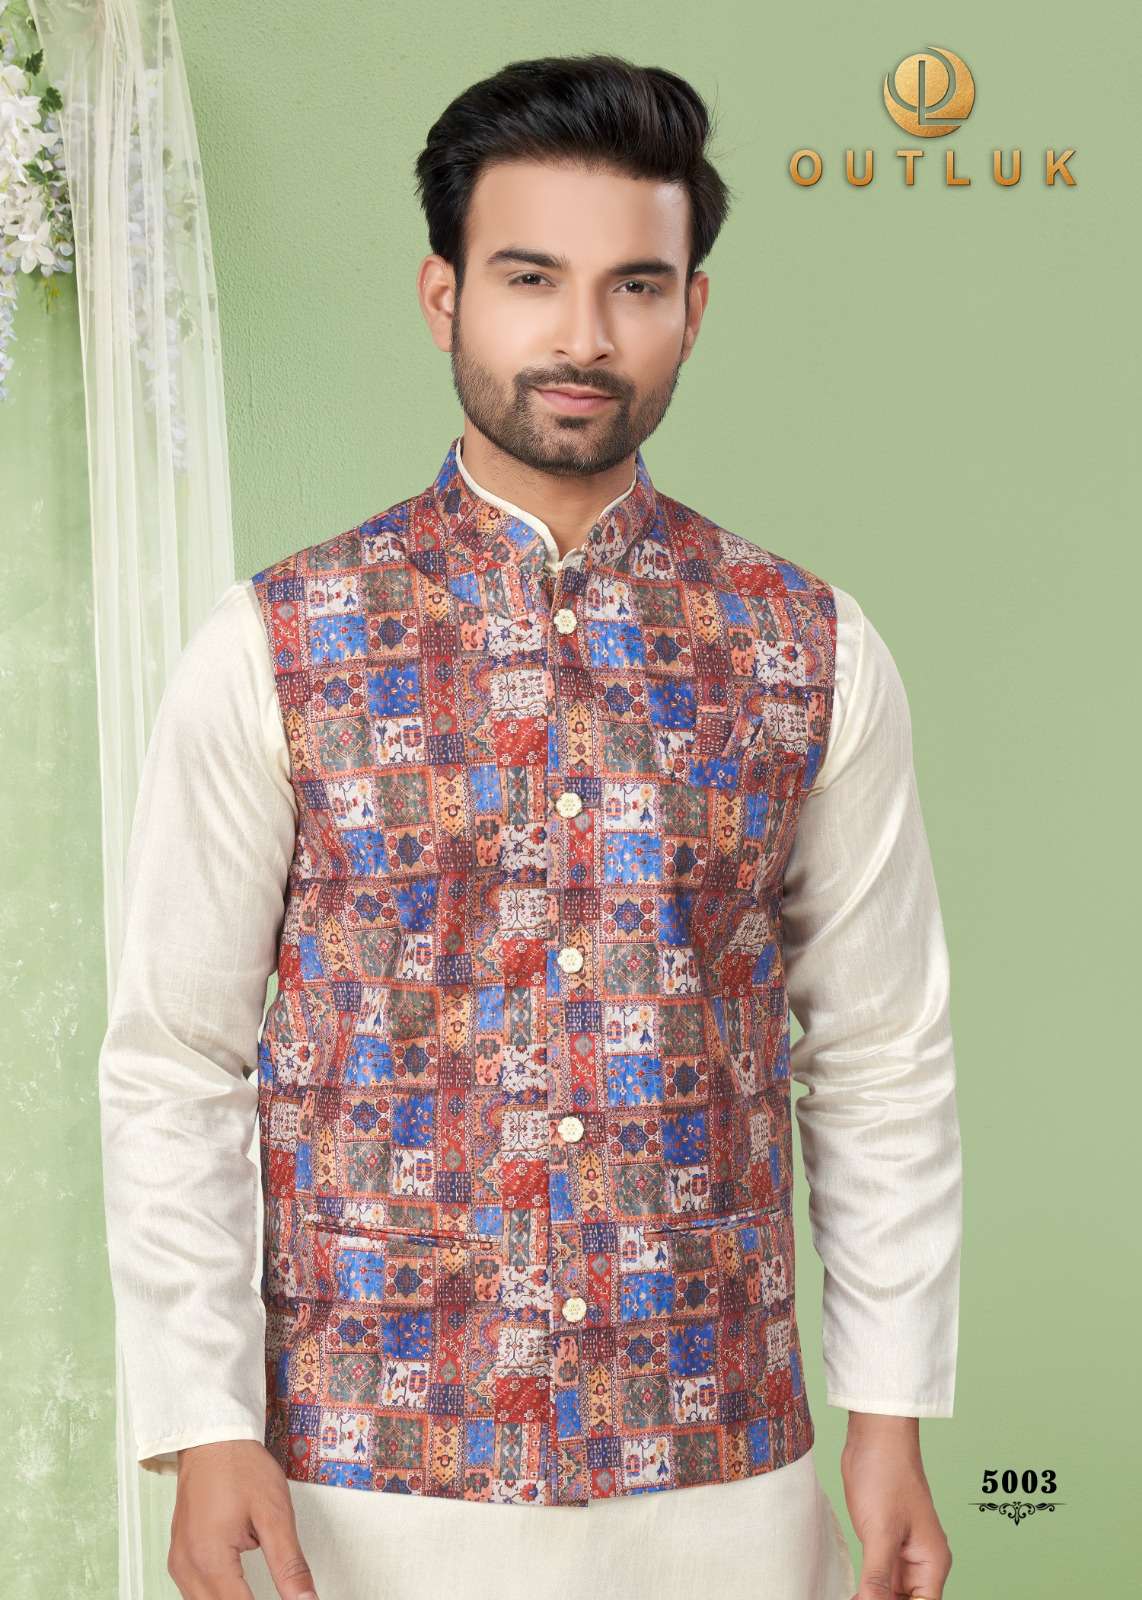 Indian Sherwani for Men Wedding Blue Bandhgala Dress Jodhpuri Suit Style  Traditional Ethnic Indo-western Kurta Top Suit Blazer Coat - Etsy |  Sherwani for men wedding, Waistcoat designs, Dress suits for men